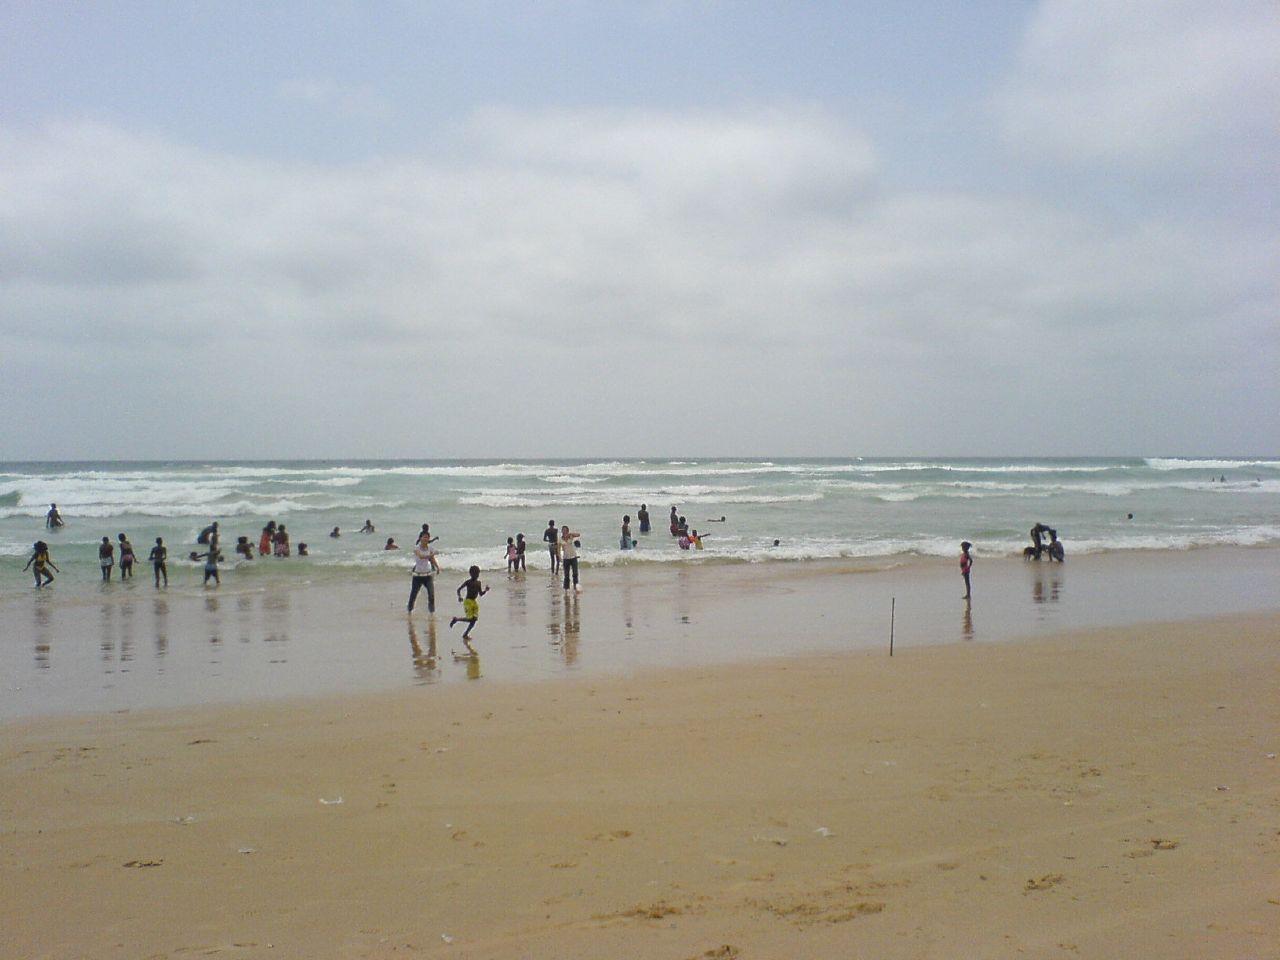 Sandee - Yoff Beach